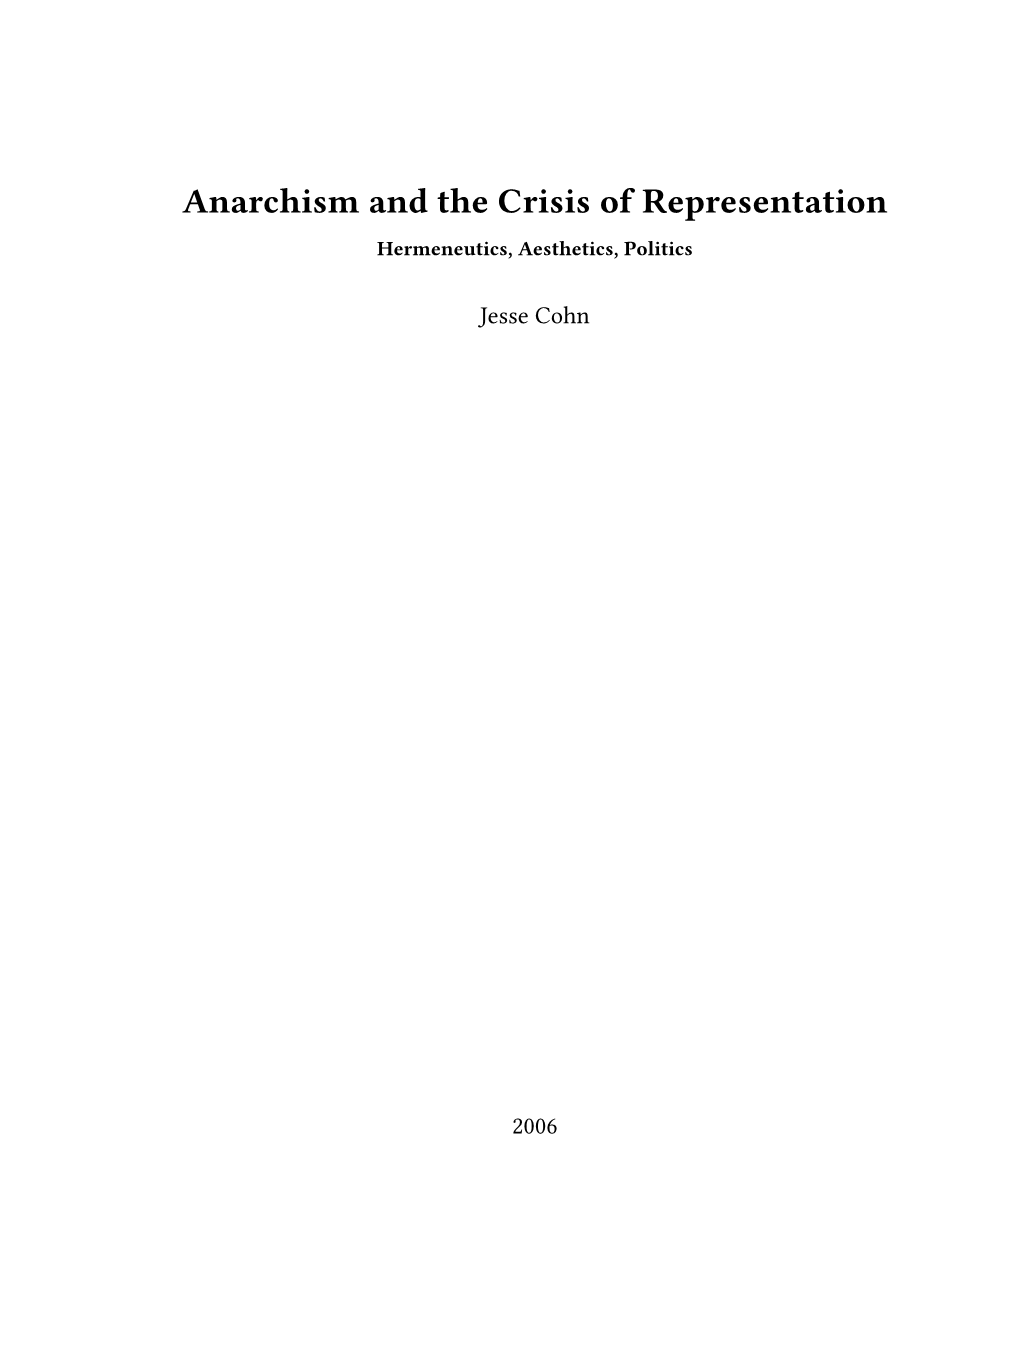 Anarchism and the Crisis of Representation Hermeneutics, Aesthetics, Politics